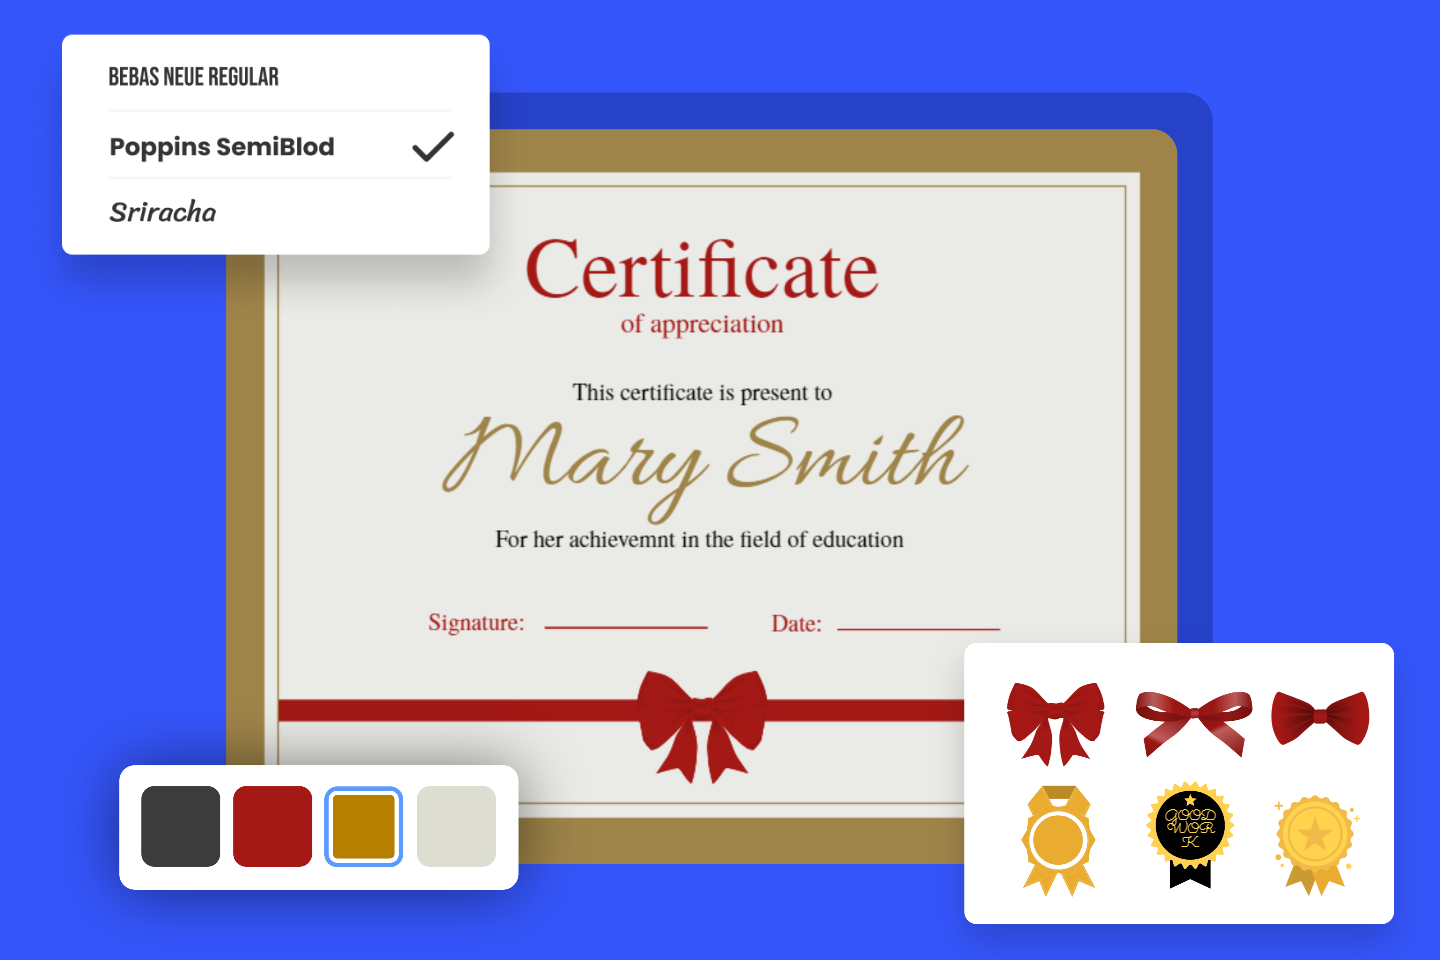 employee appreciation certificate templates